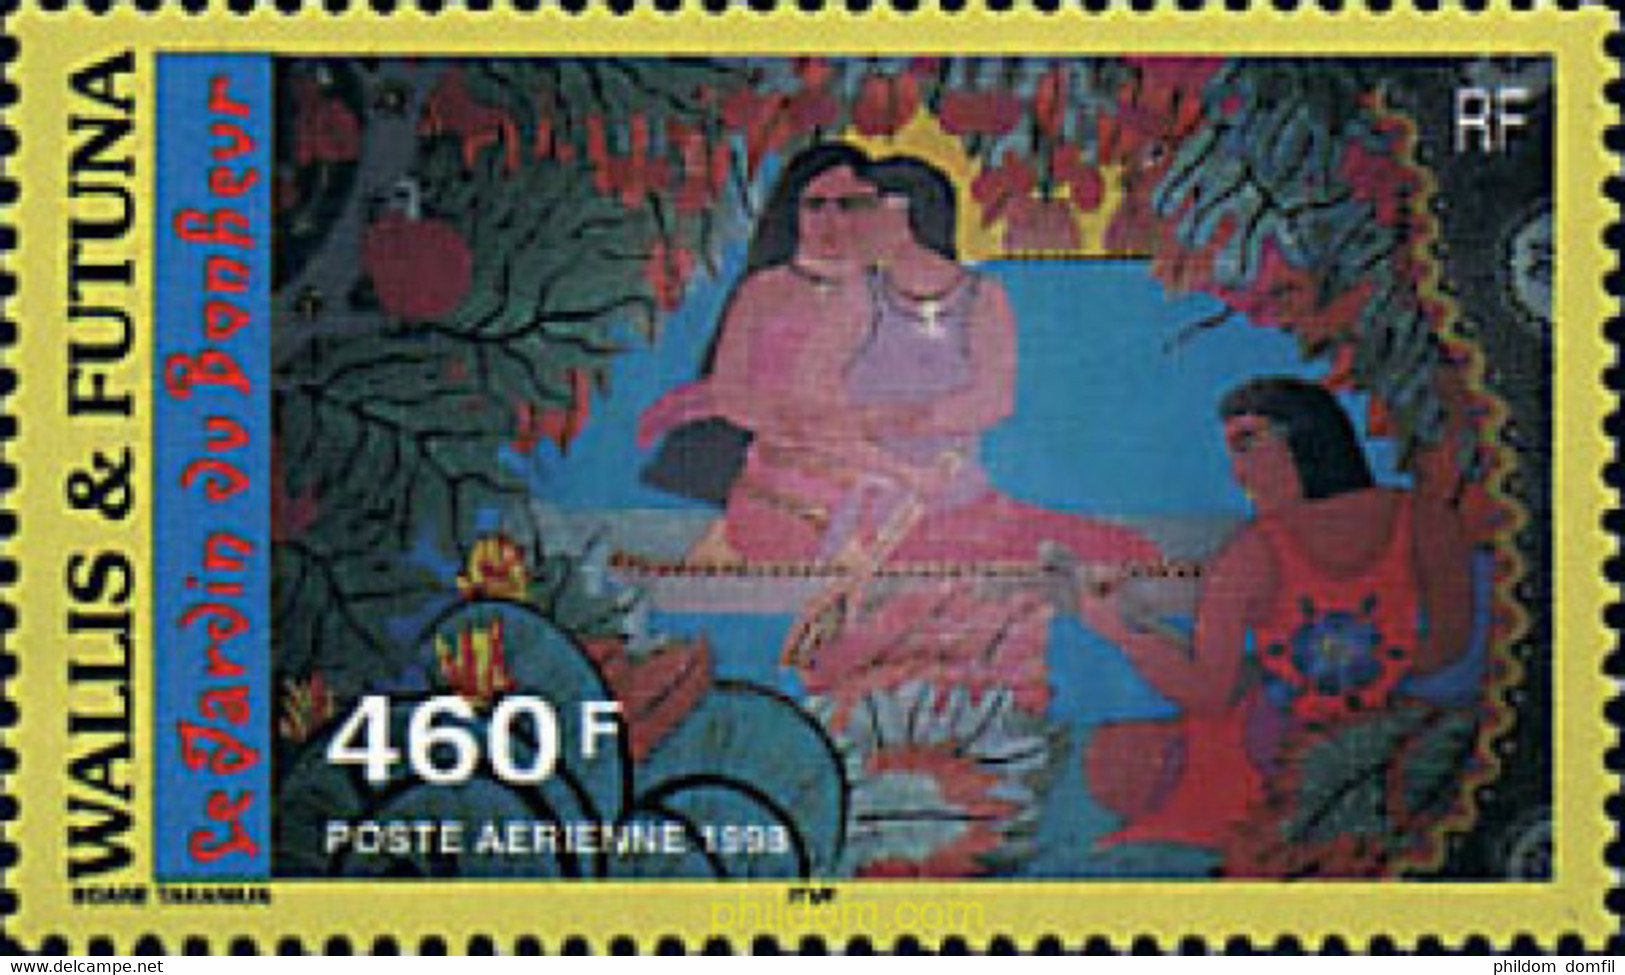 92994 MNH WALLIS Y FUTUNA 1998 PINTURA - Used Stamps